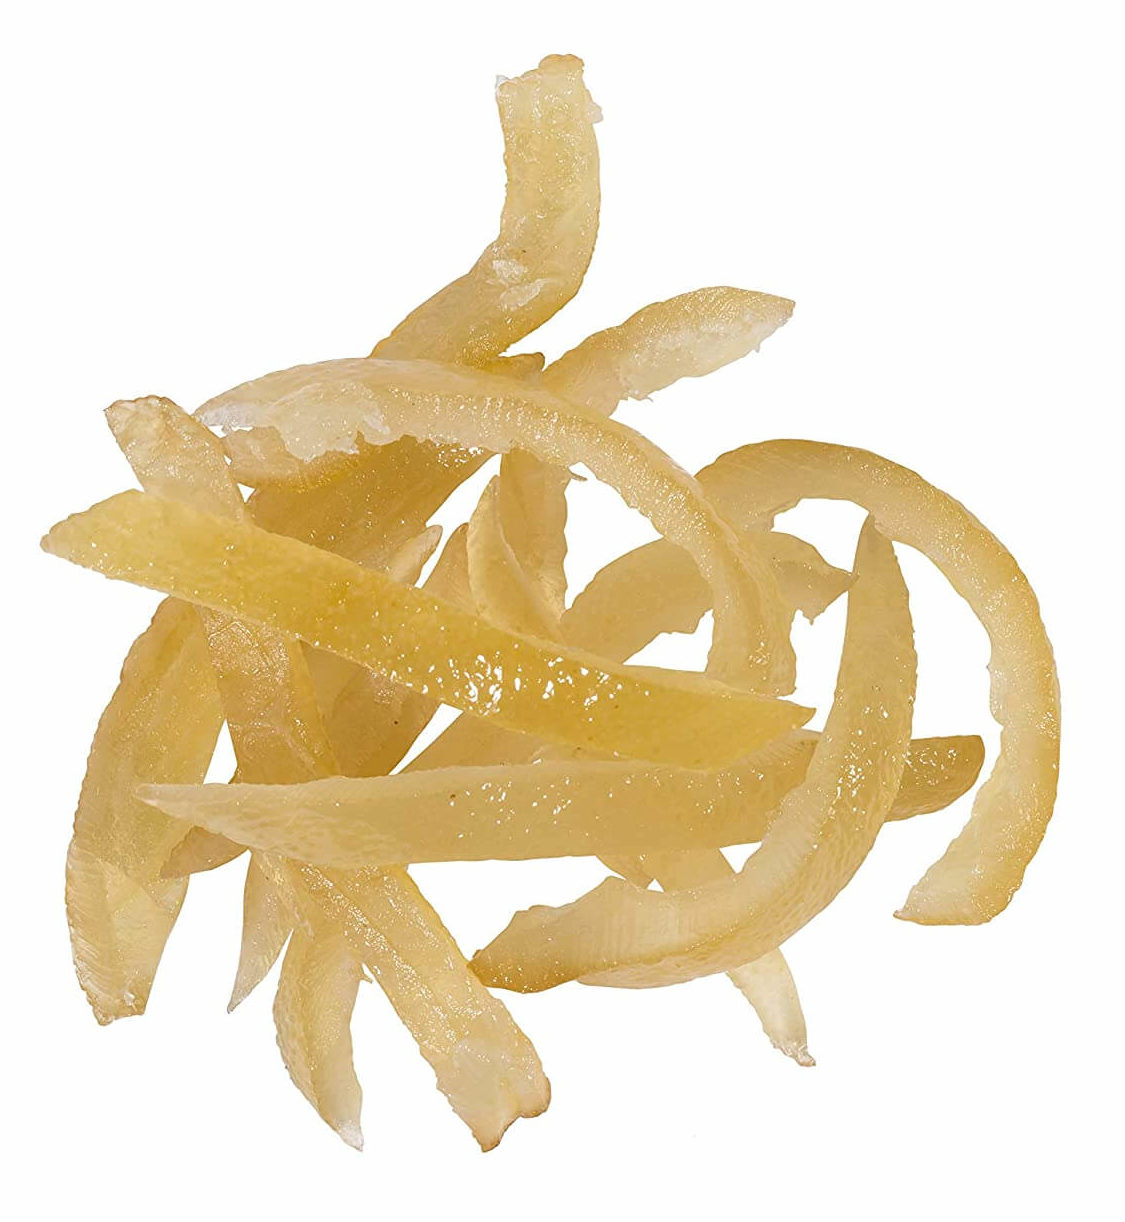 OliveNation Candied Lemon Peel Slices